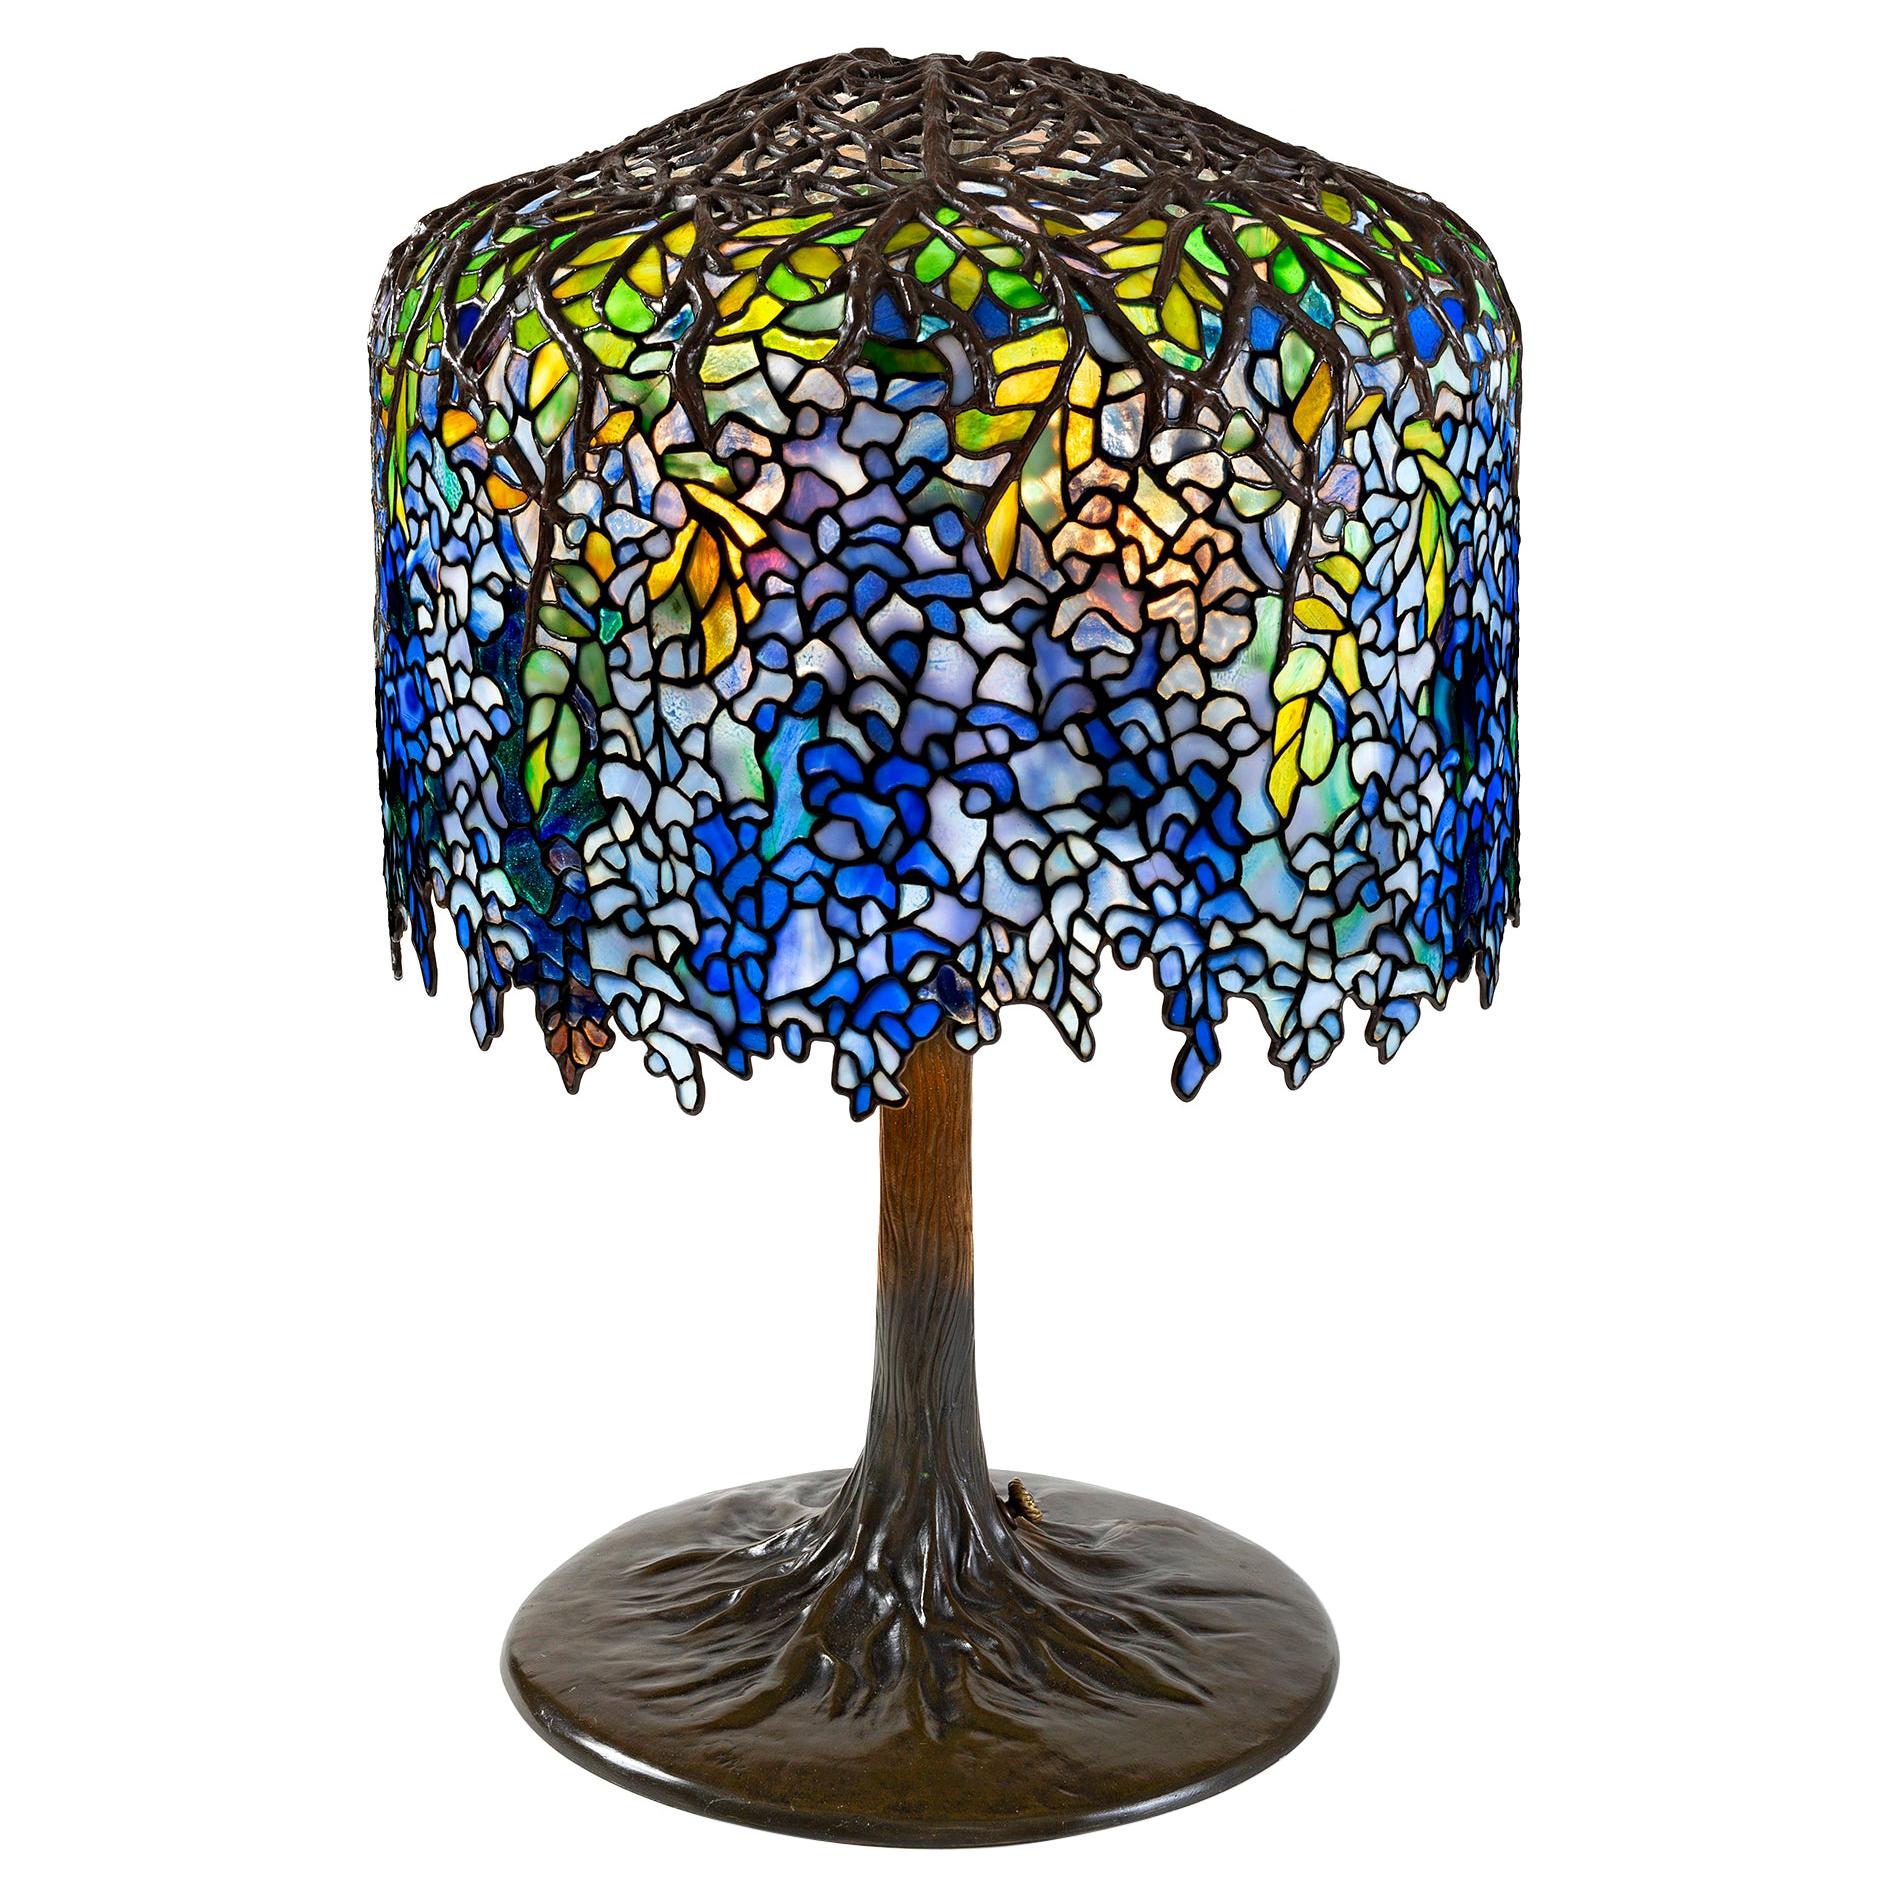 Tiffany Studios New York "Wisteria" Table Lamp